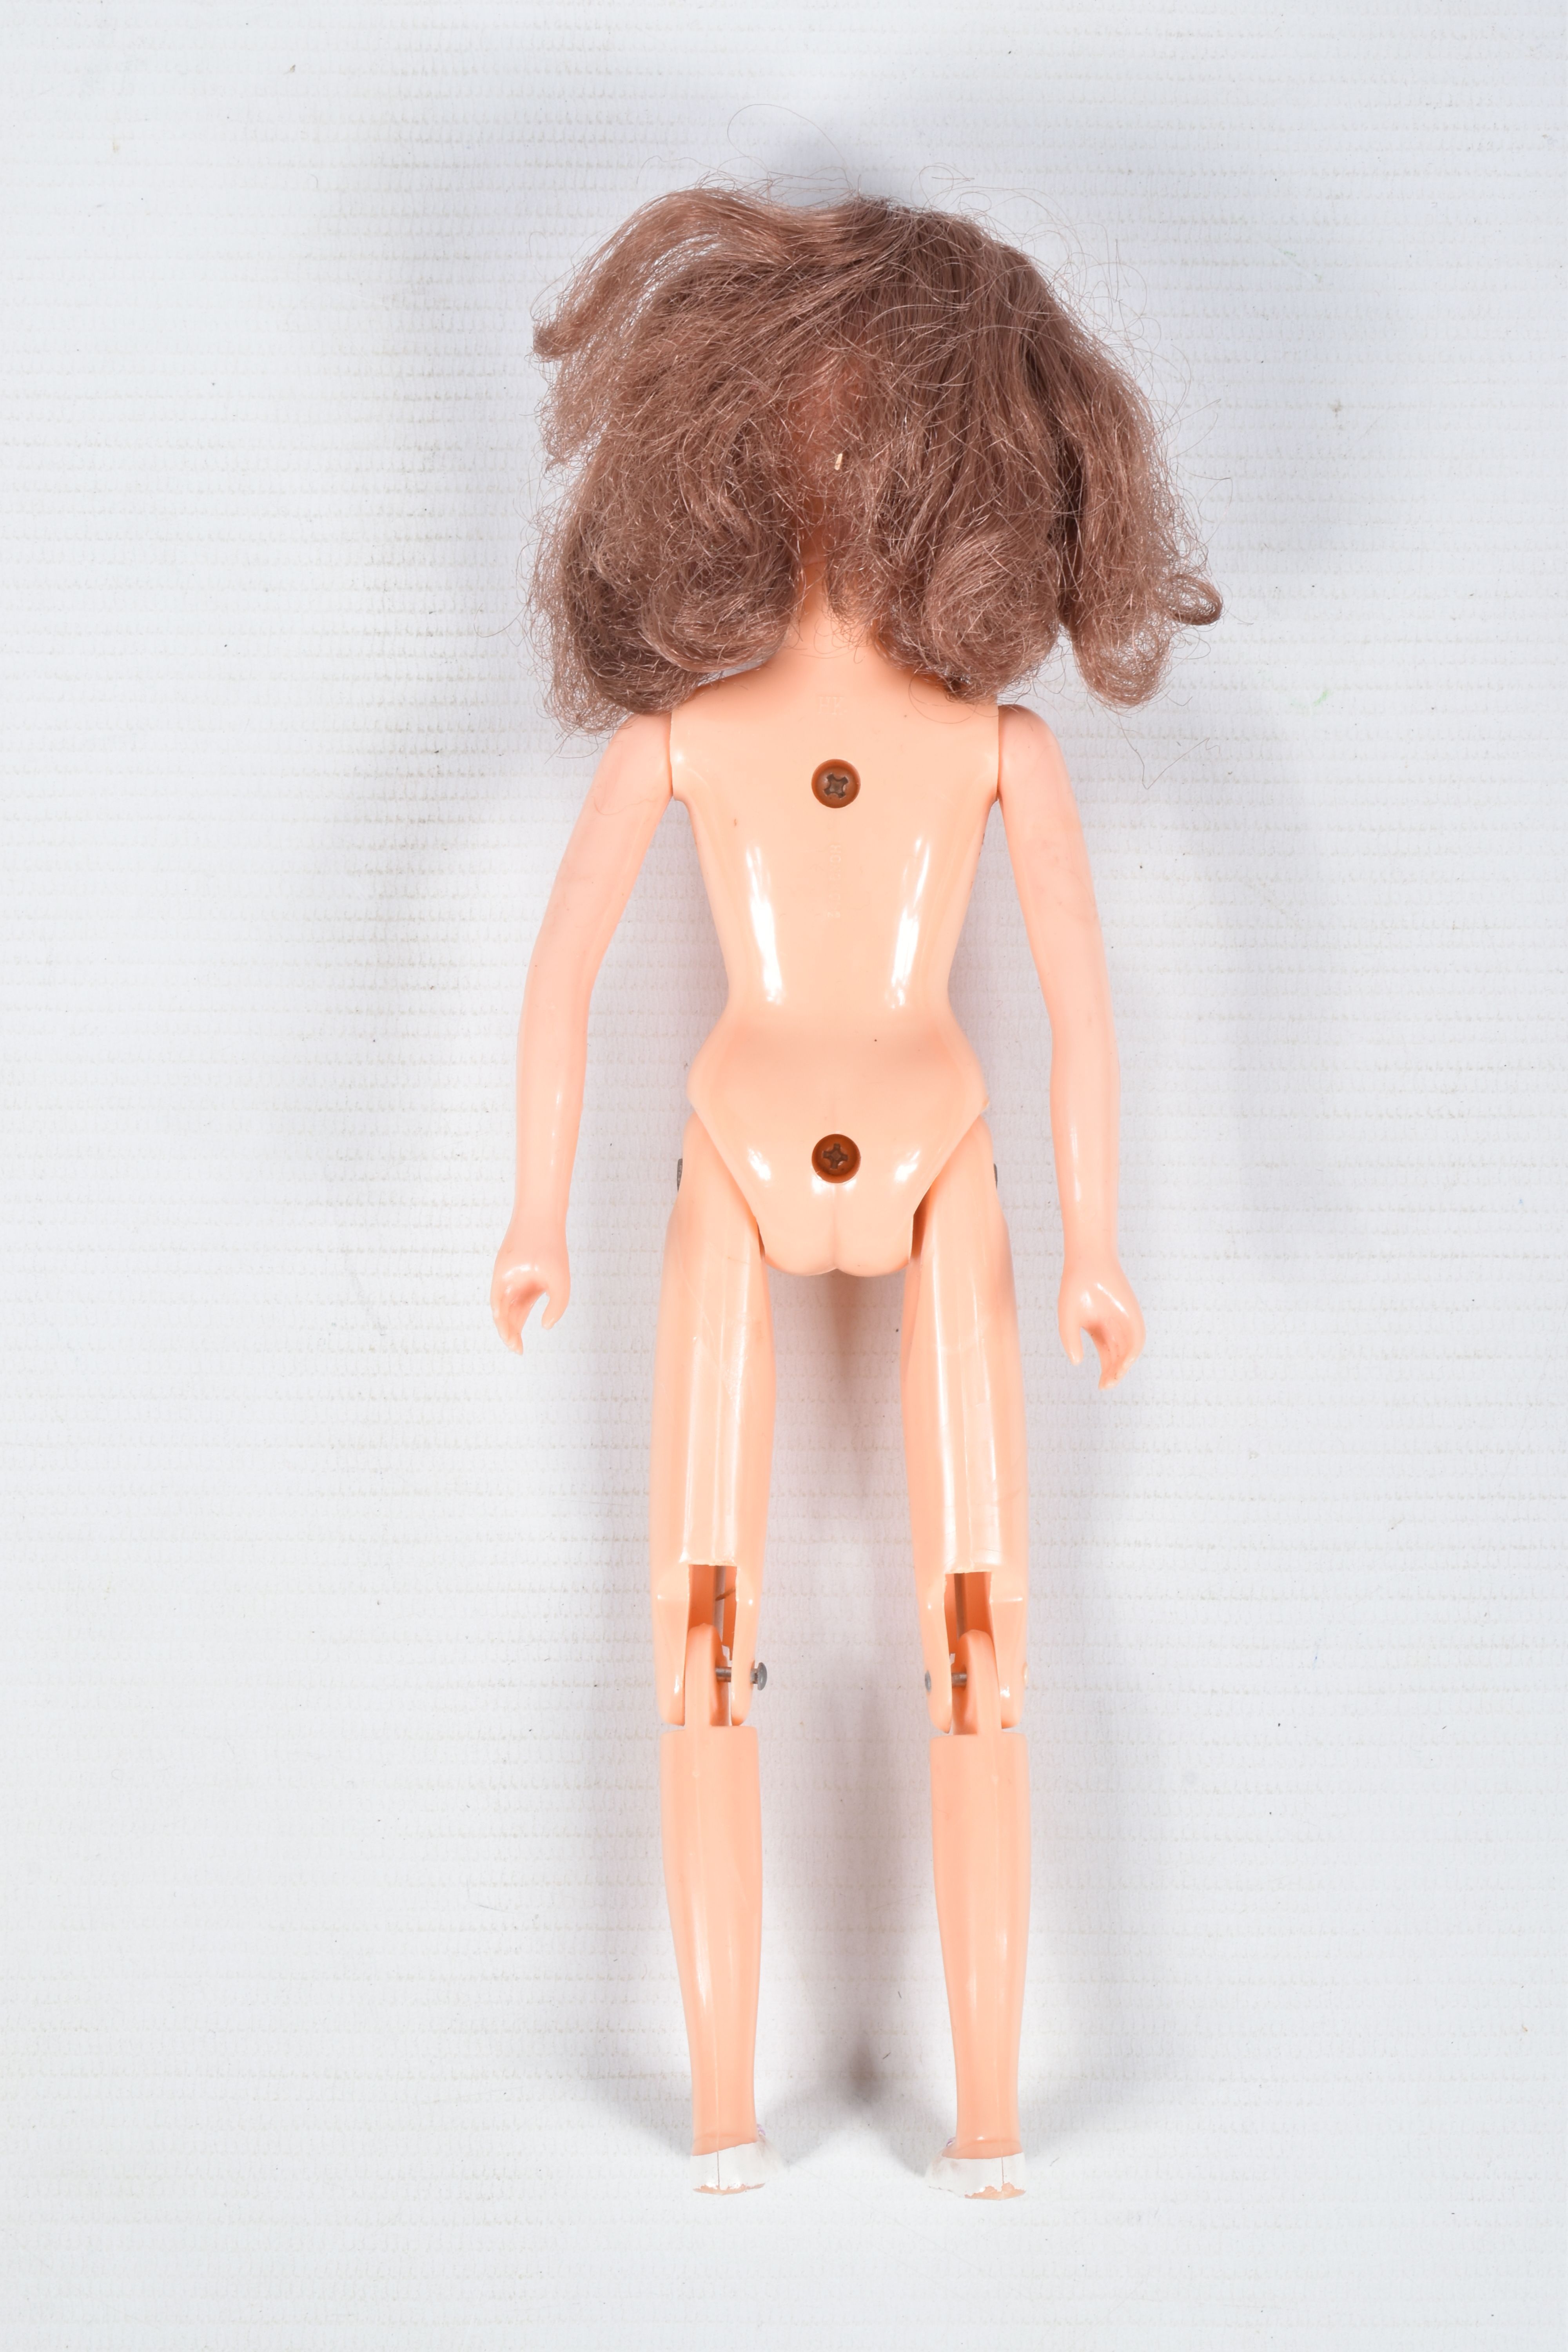 A QUANTITY OF 1960'S MATTEL DOLLS, Midge, marked 'Midge ©1962 Barbie ©1962 Mattel Patented' to her - Image 5 of 11